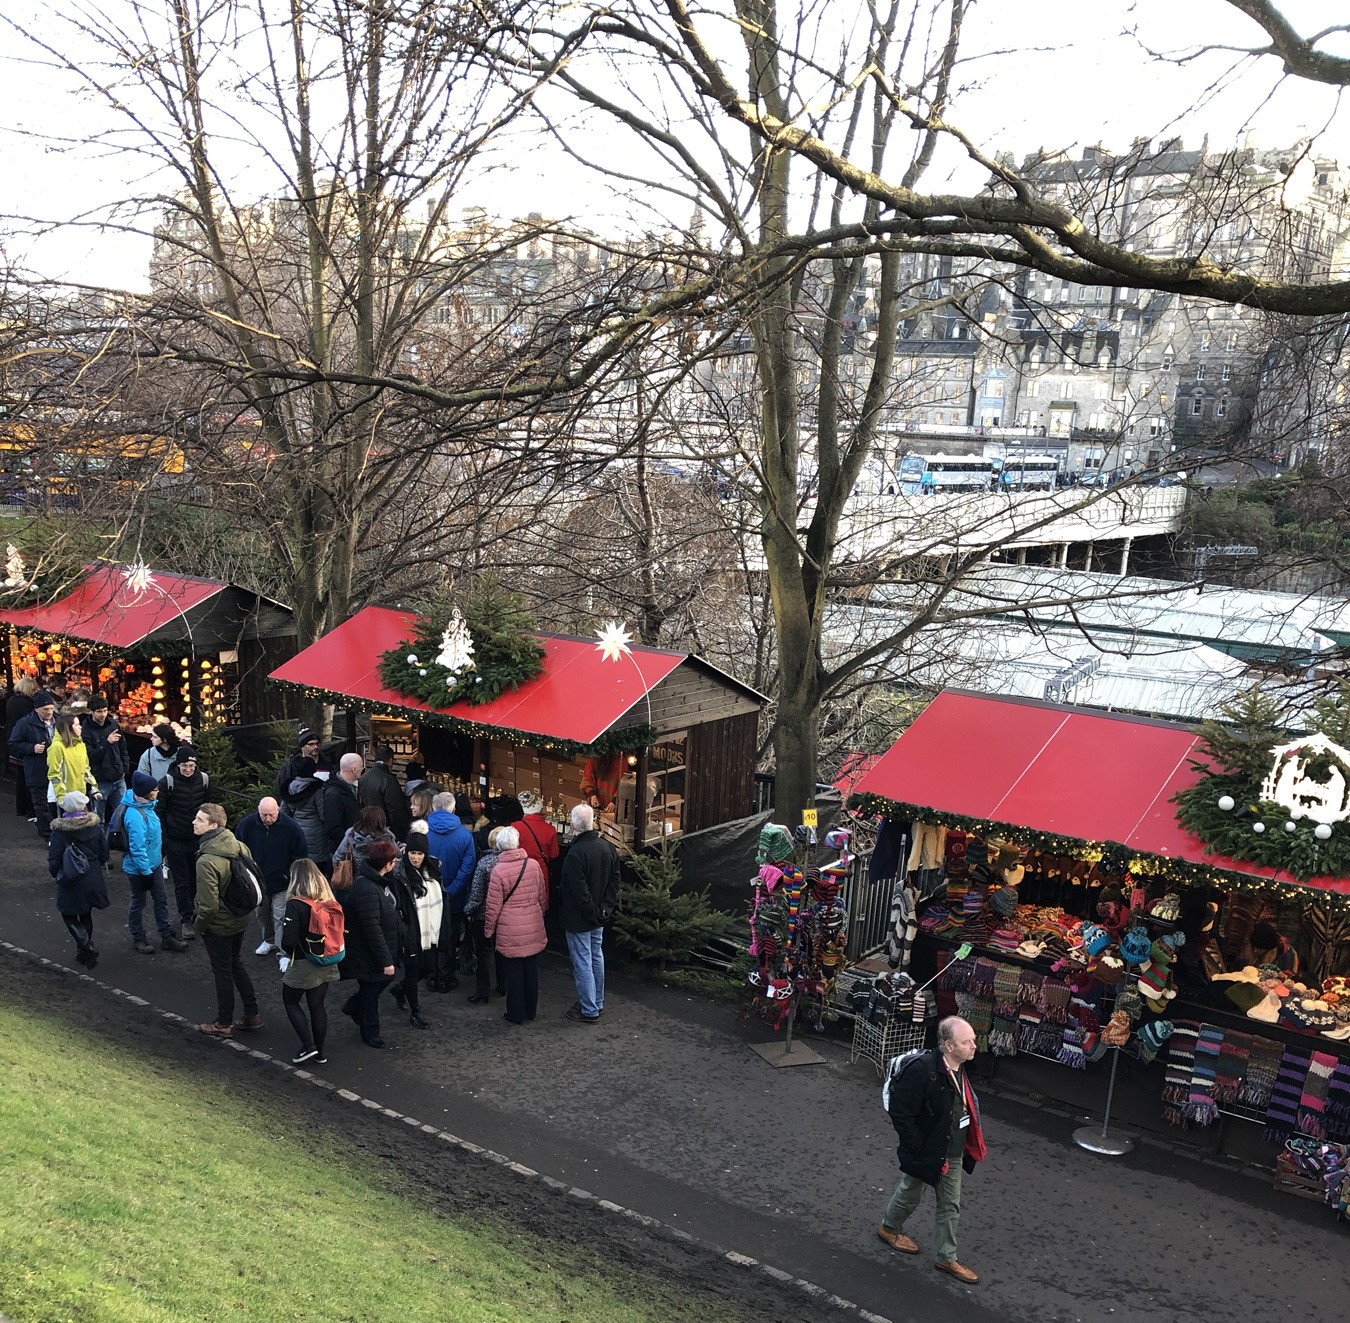 stalls at the Edinburgh Christmas market